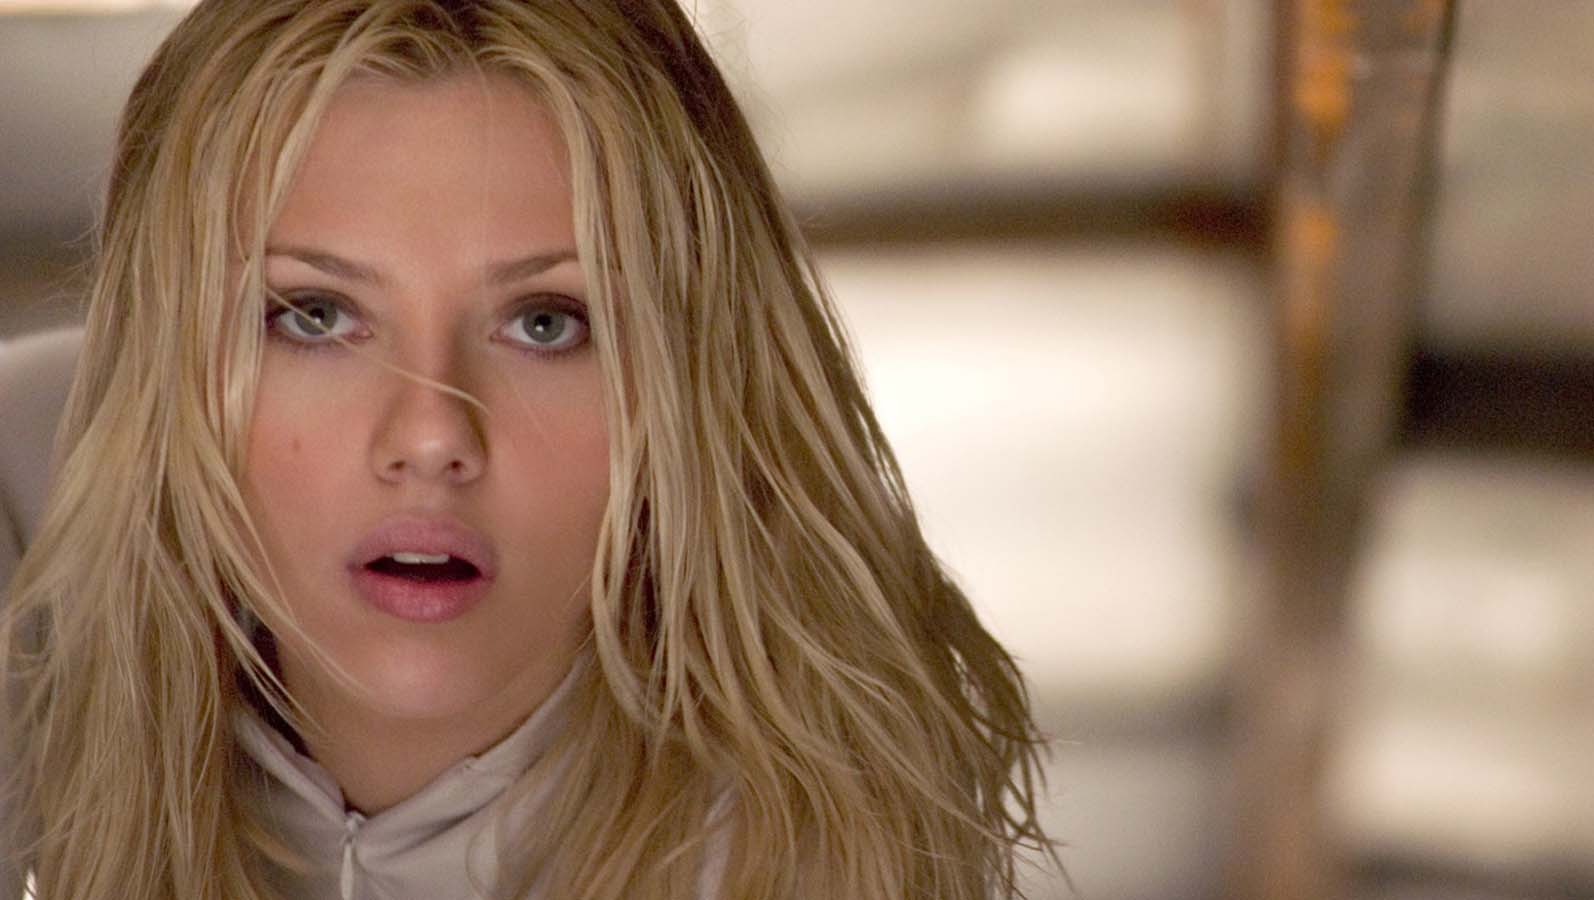 People 1594x900 women actress face blonde long hair open mouth The Island Scarlett Johansson film stills